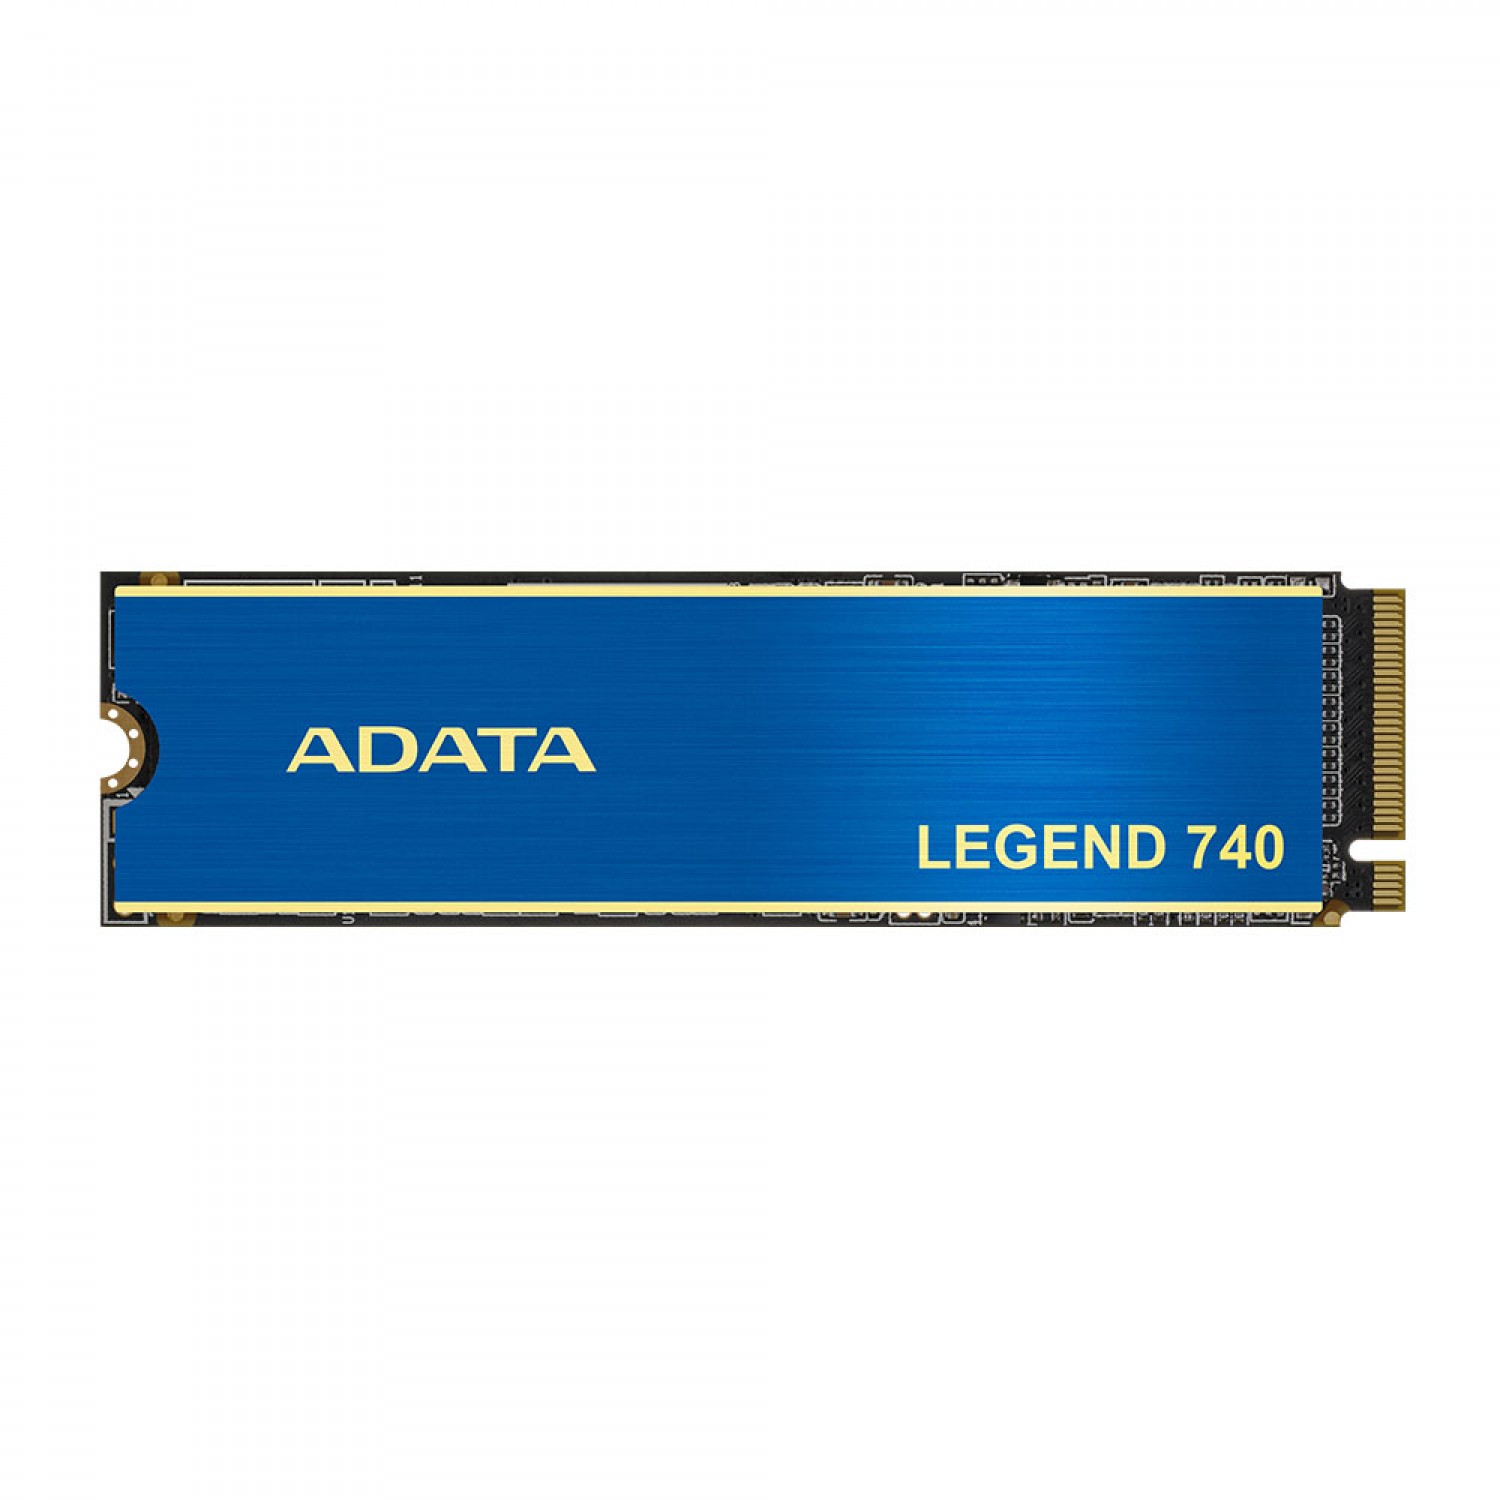 حافظه اس اس دی ADATA Legend 740 250GB